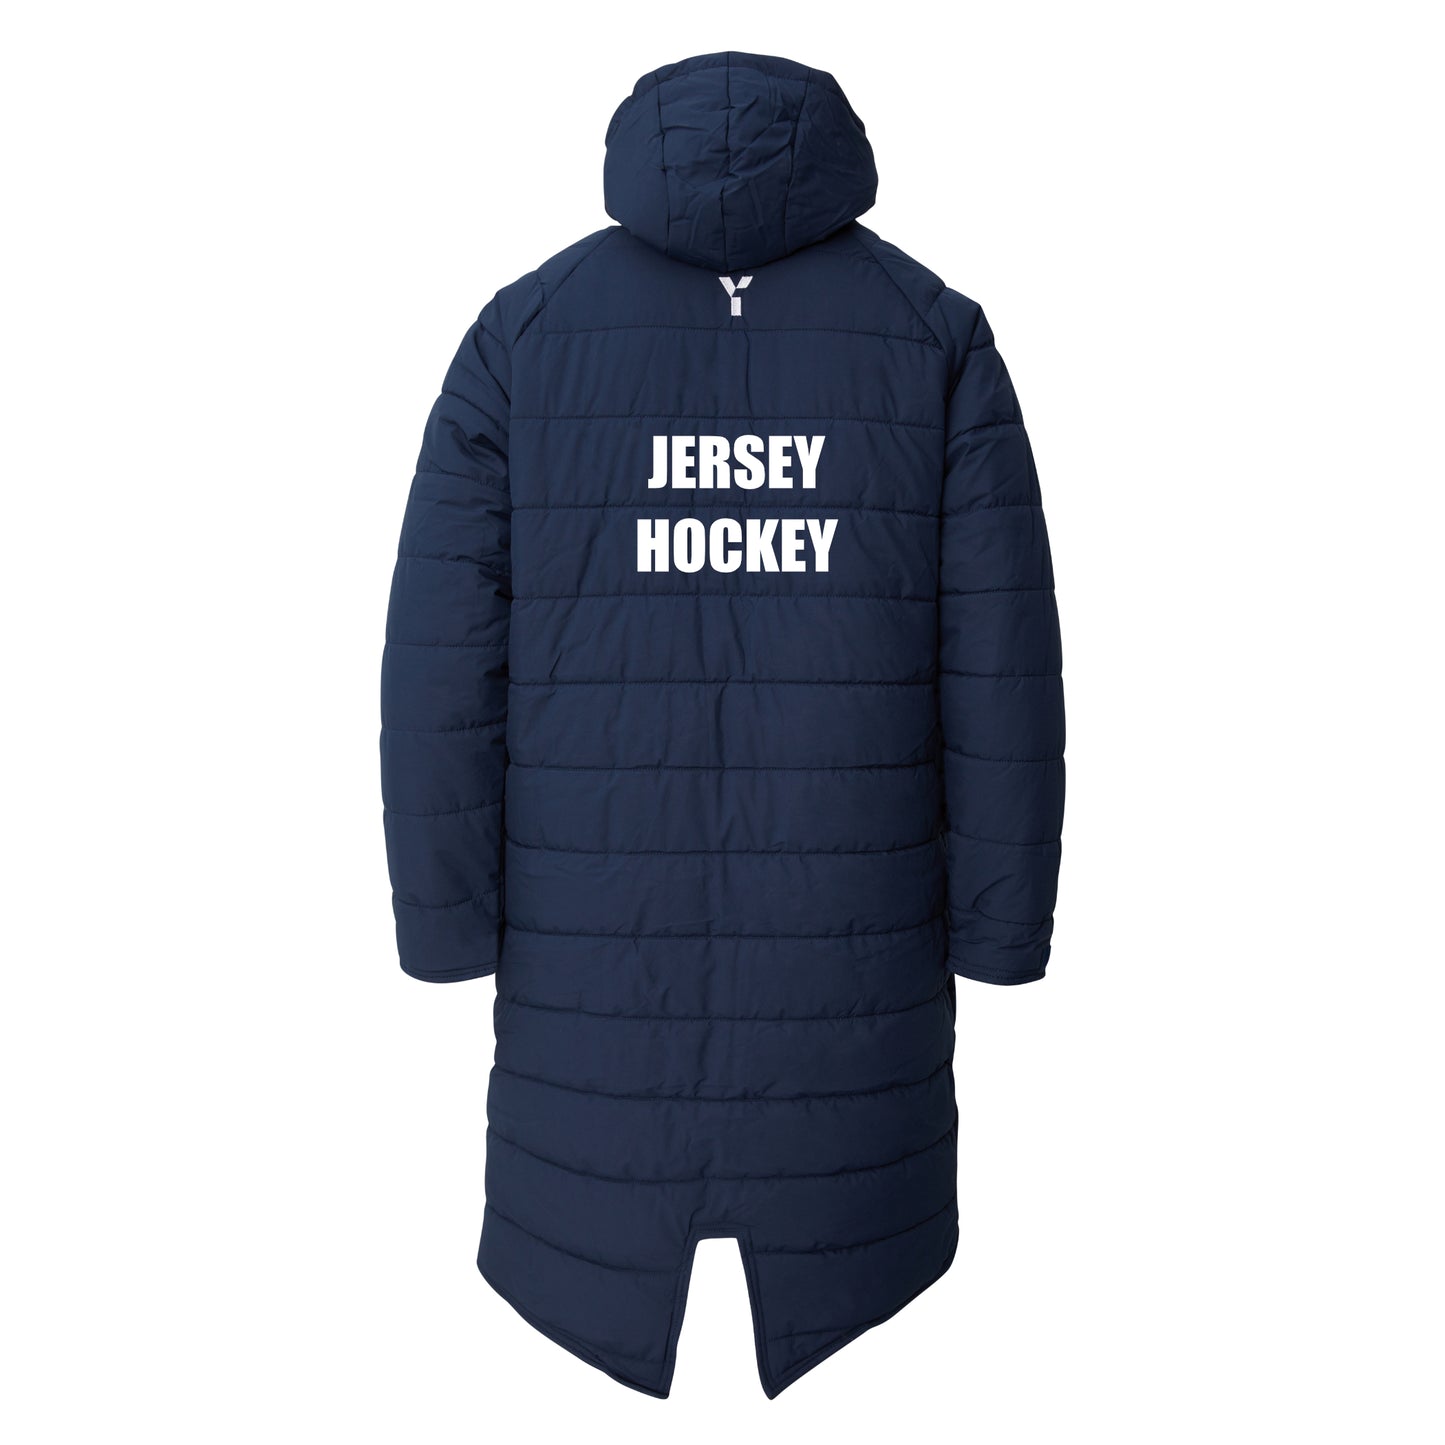 Jersey Hockey - Bench Jacket Unisex Navy